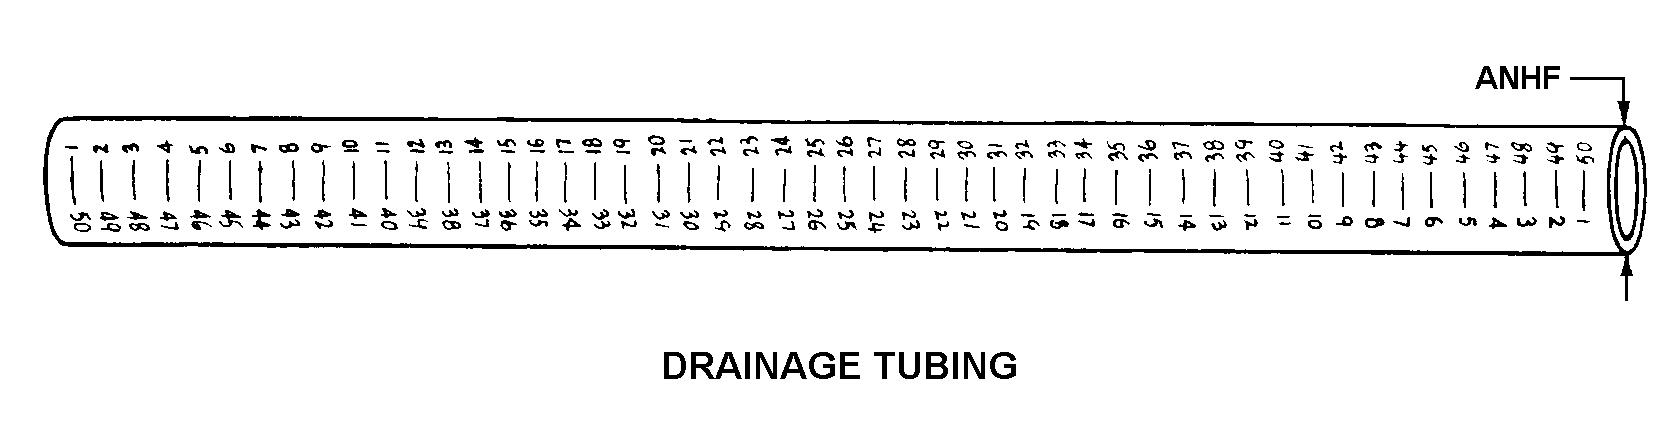 DRAINAGE TUBING style nsn 6515-01-465-4949